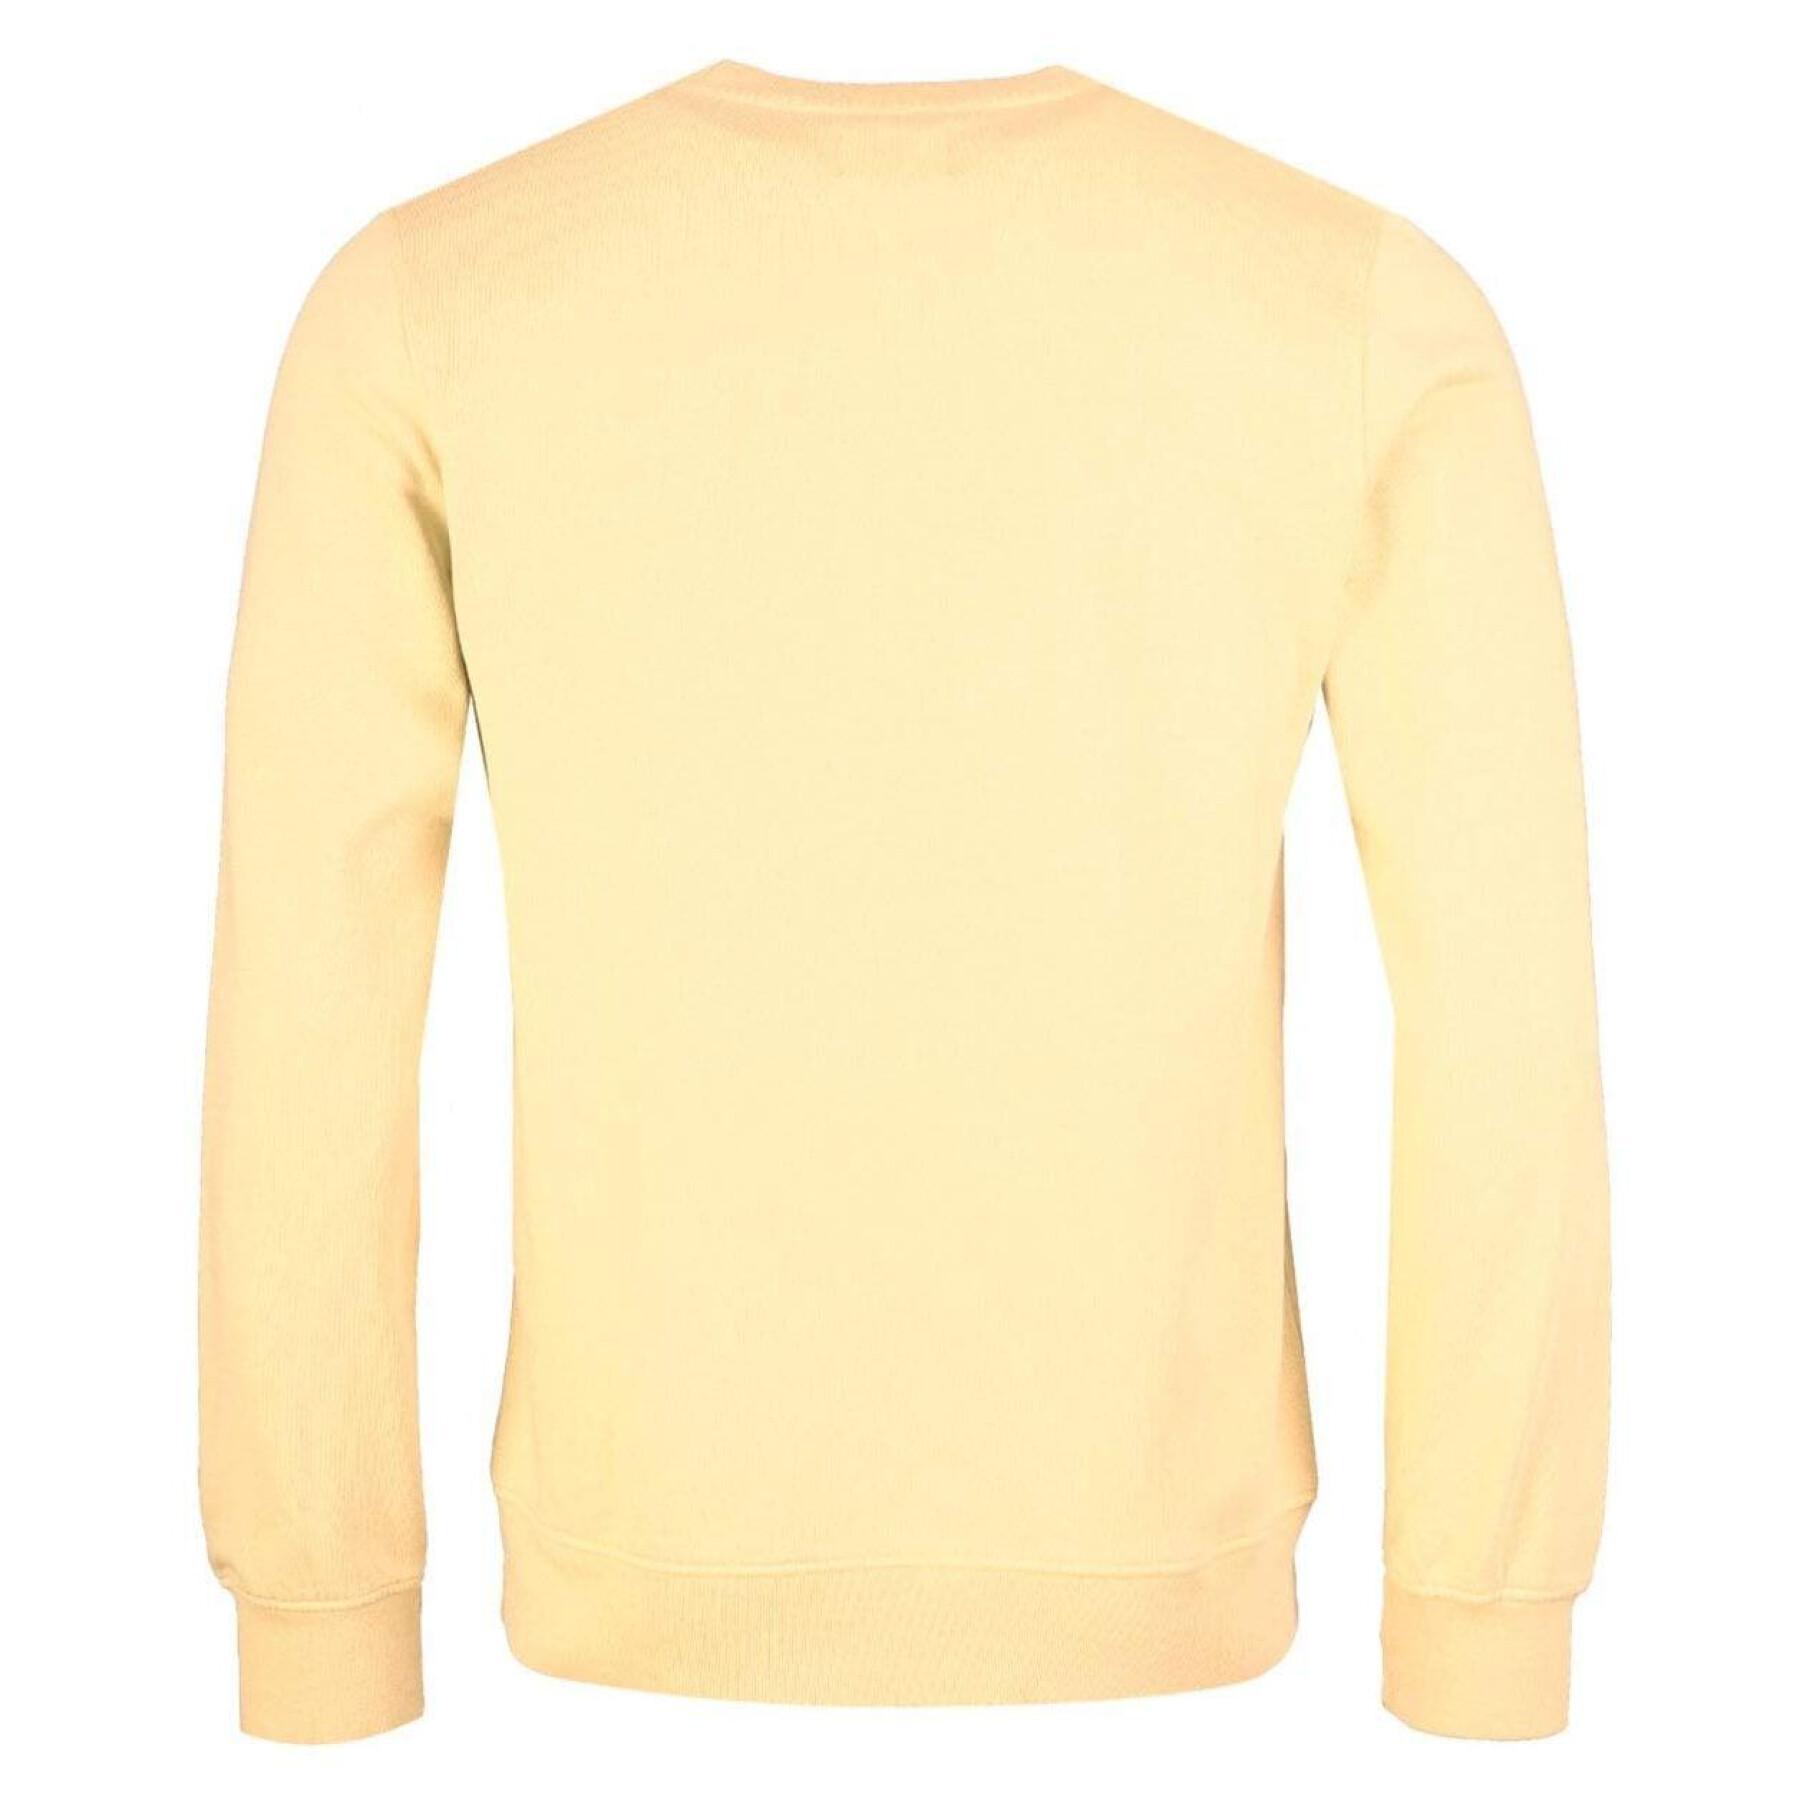 Sweatshirt round neck Colorful Standard Classic Organic soft yellow